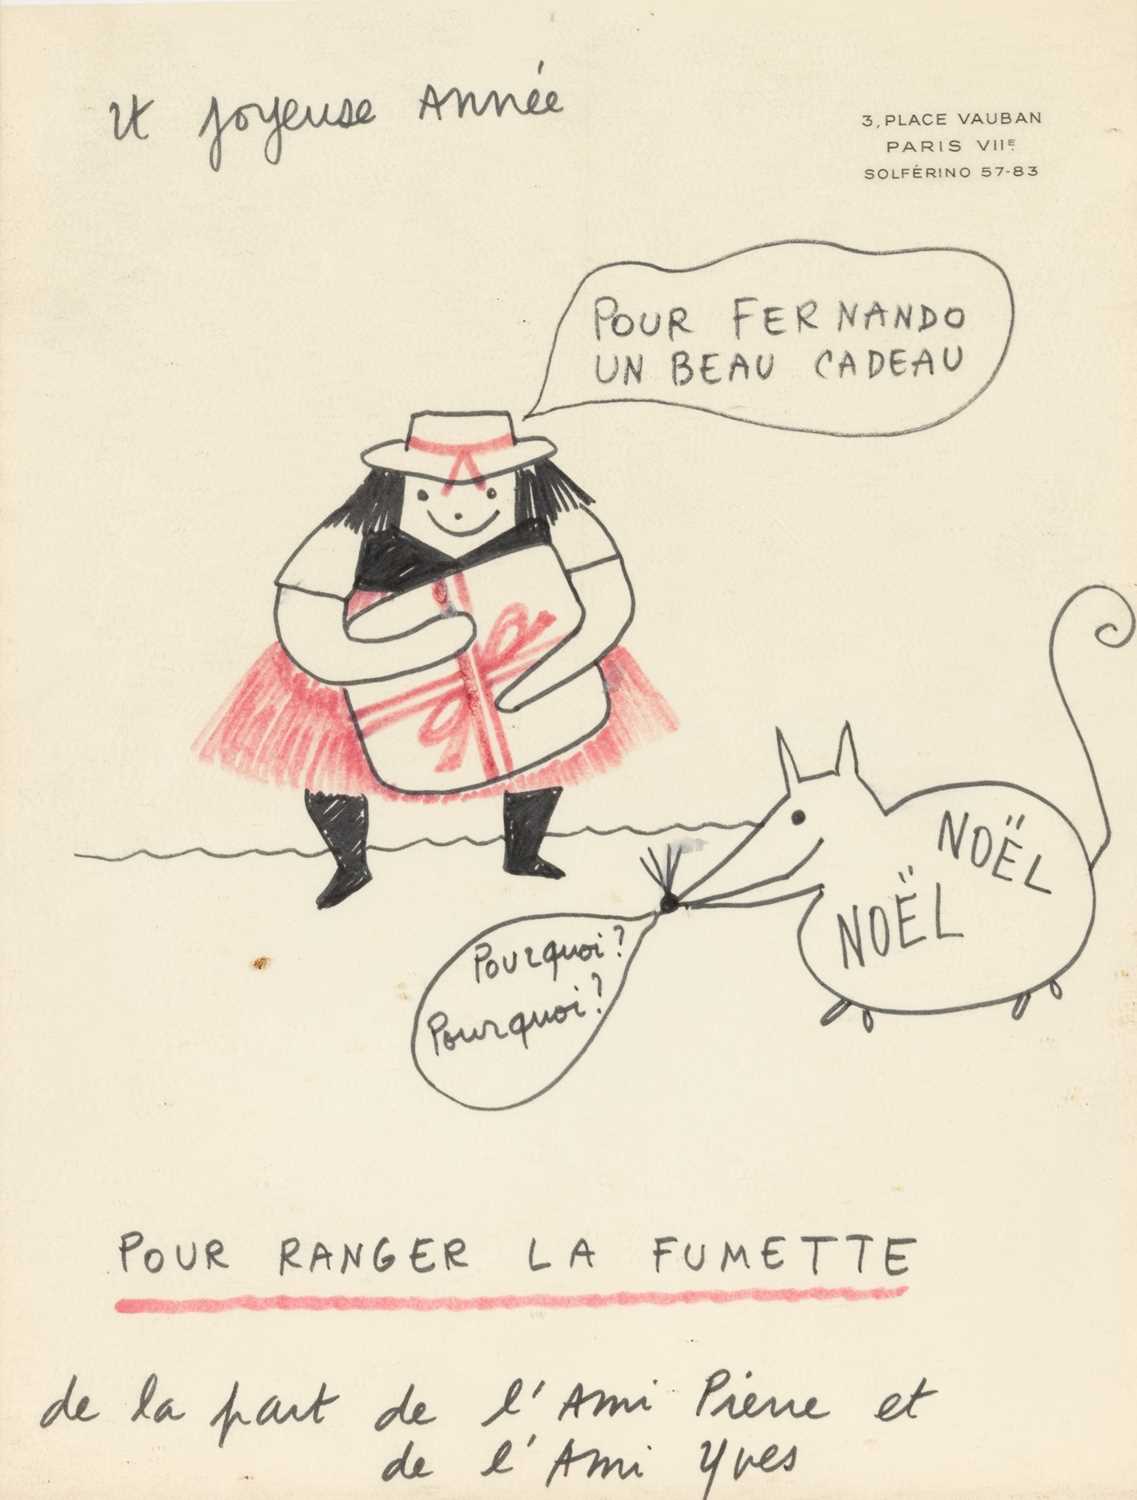 Lot 224 - An amusing Christmas card drawing featuring La Vilaine Lulu